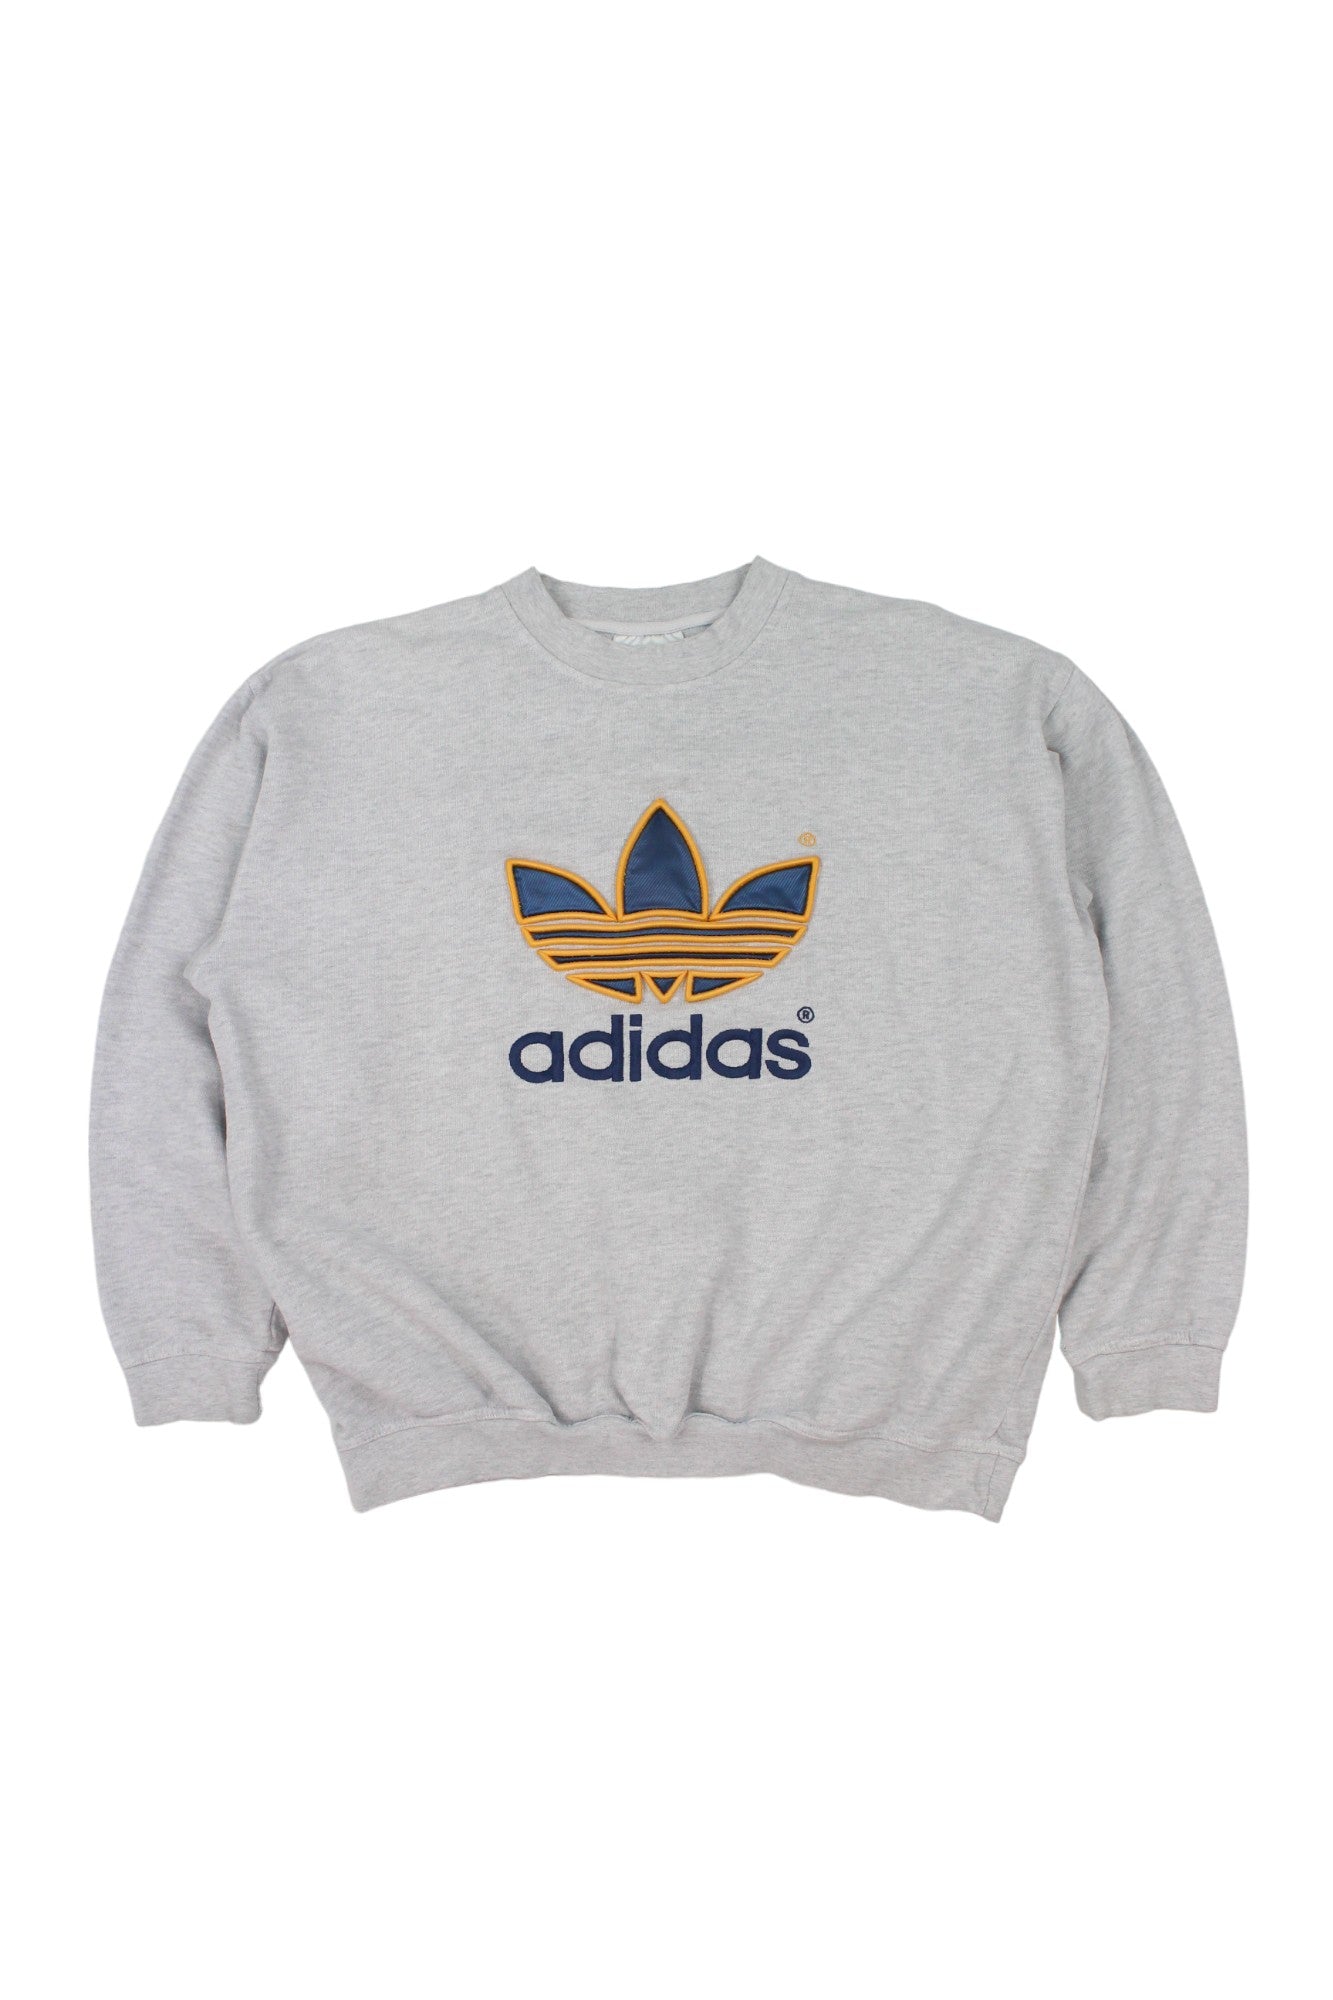 90s Adidas Grey Embroidered Sweatshirt (XS)